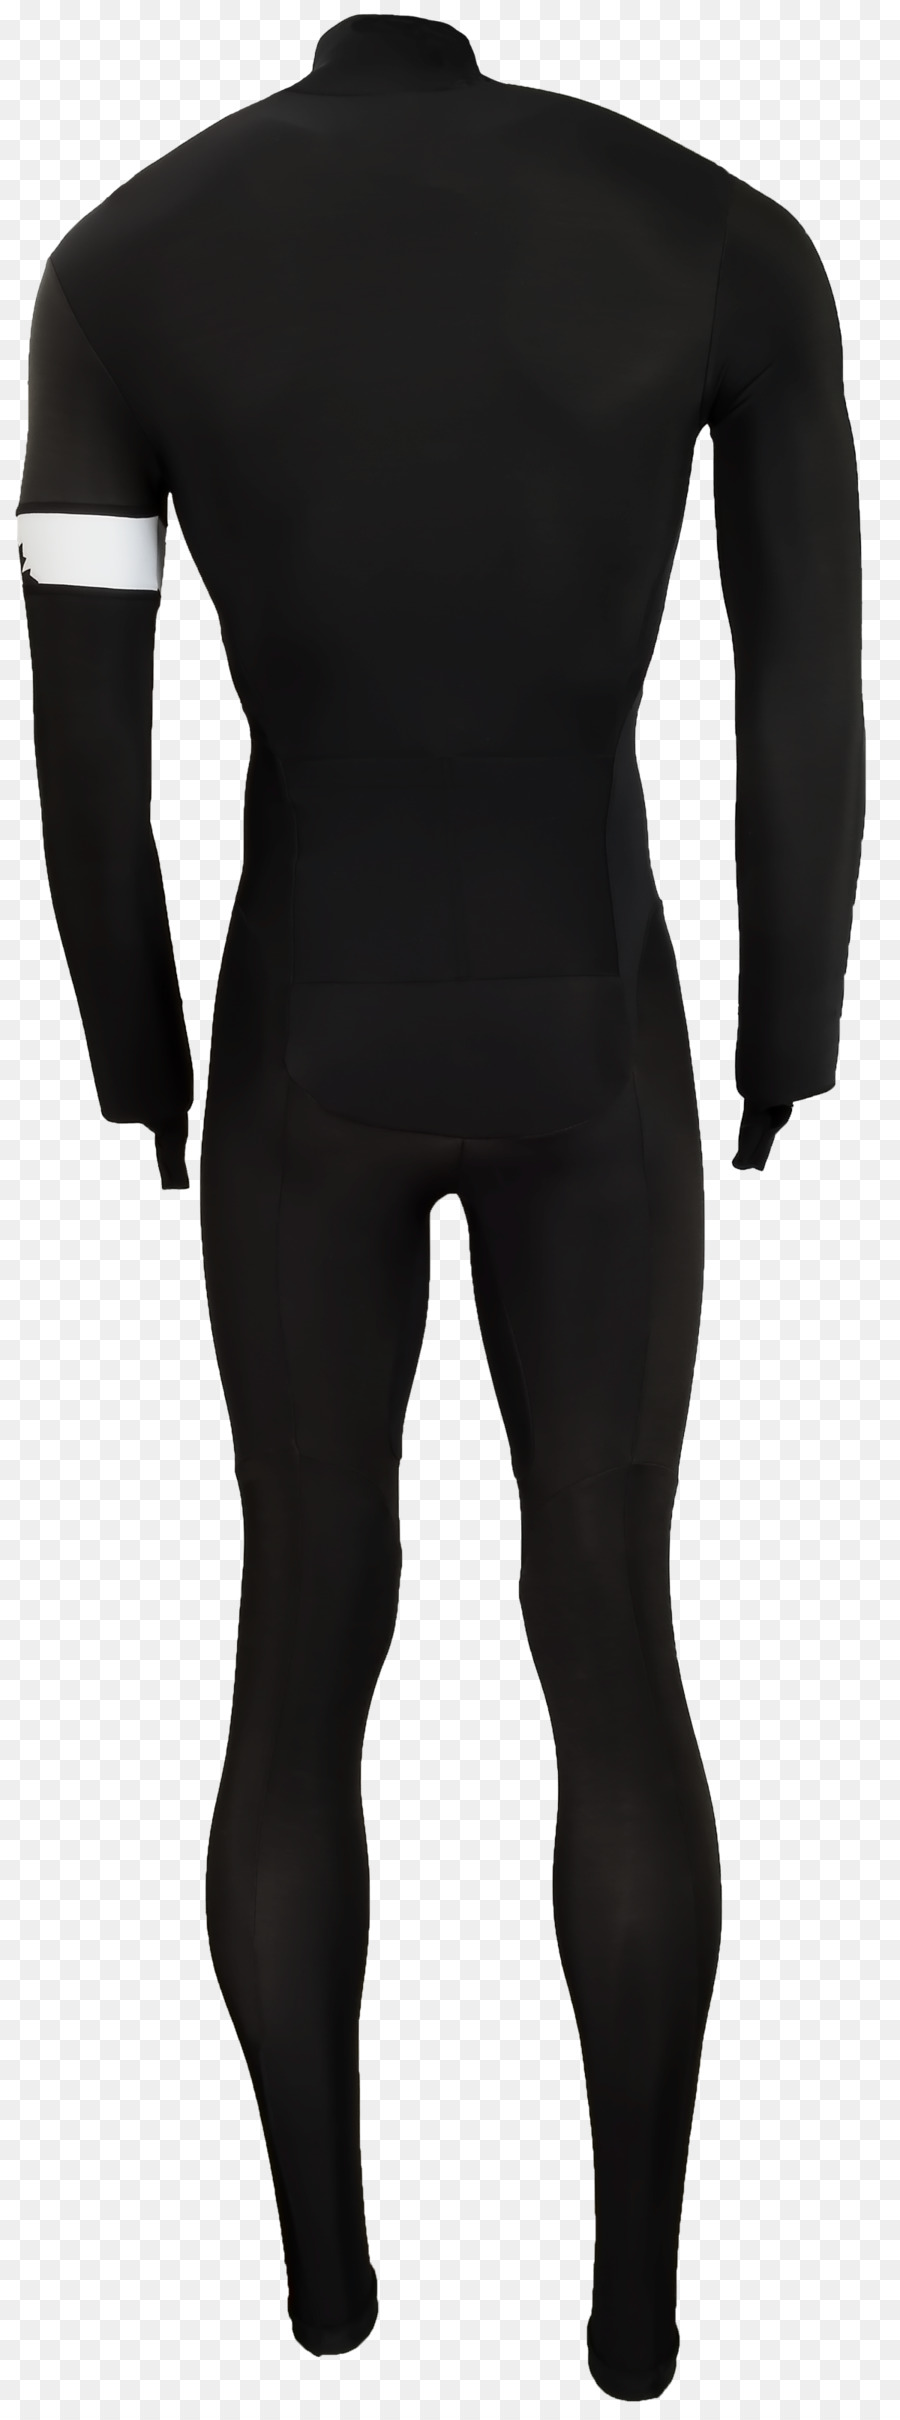 Wetsuit Black